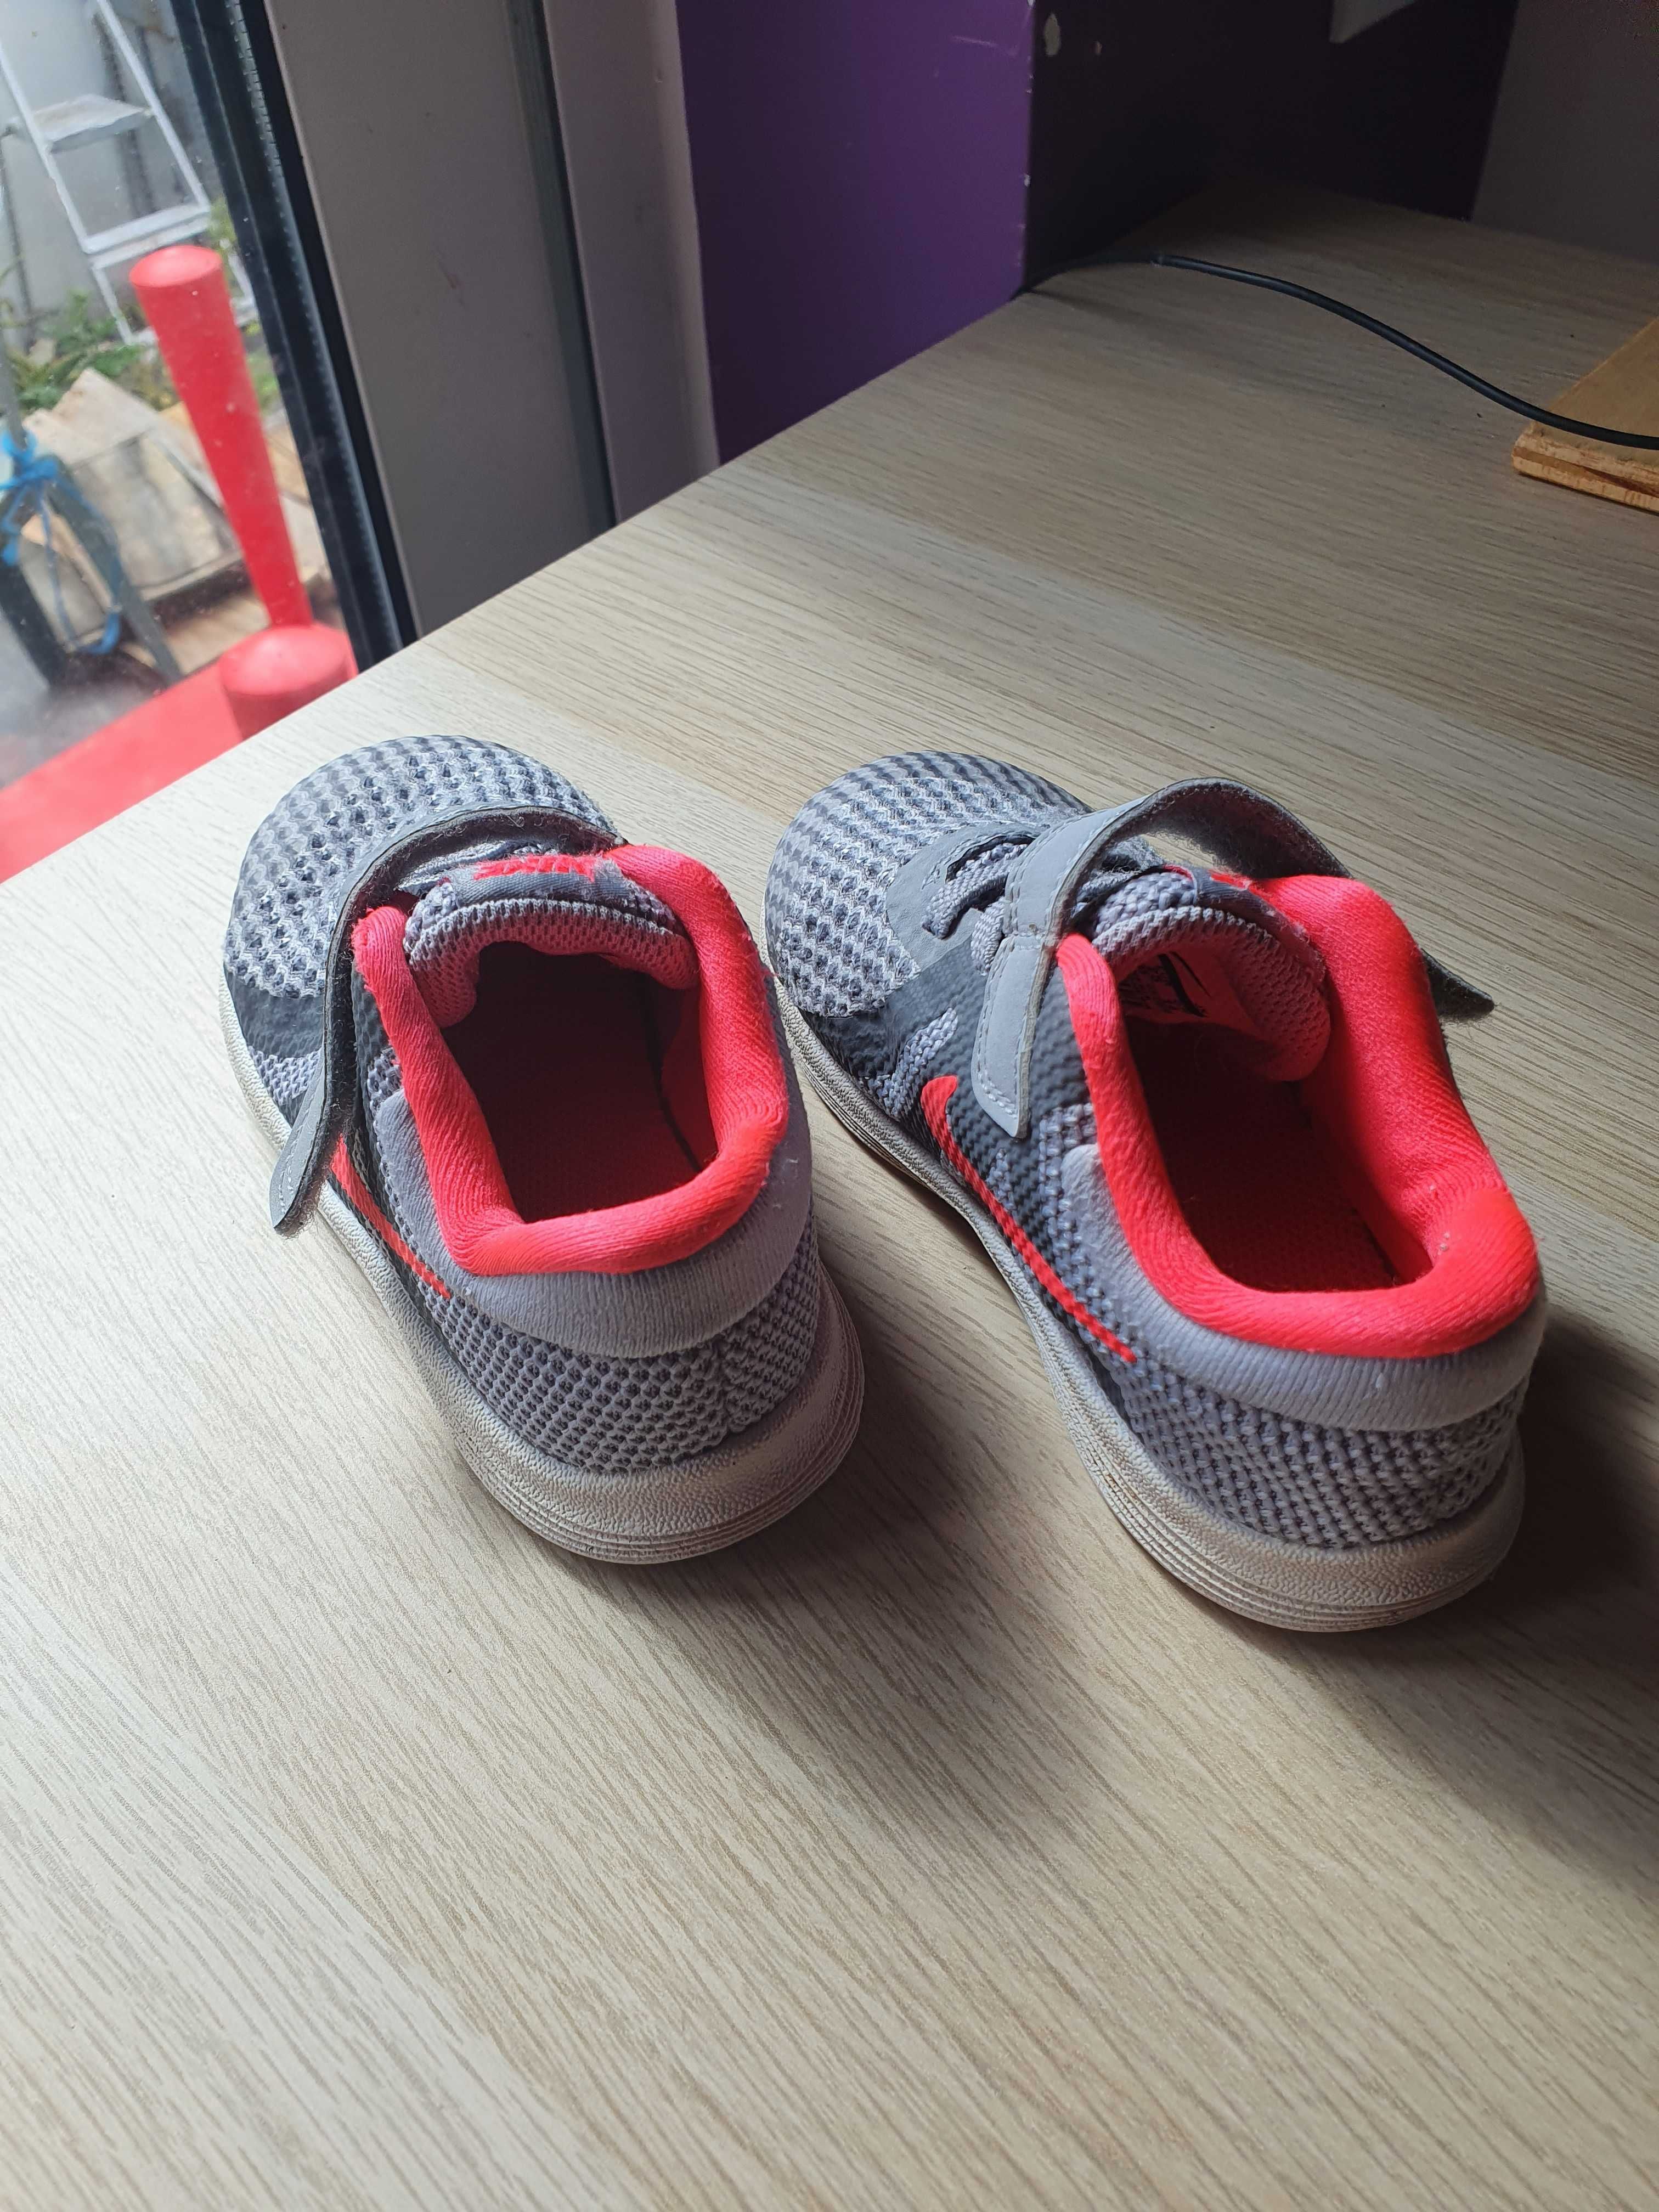 Sapatilhas/ Ténis Nike Revolution 4 GS, tamanho 25 infantil